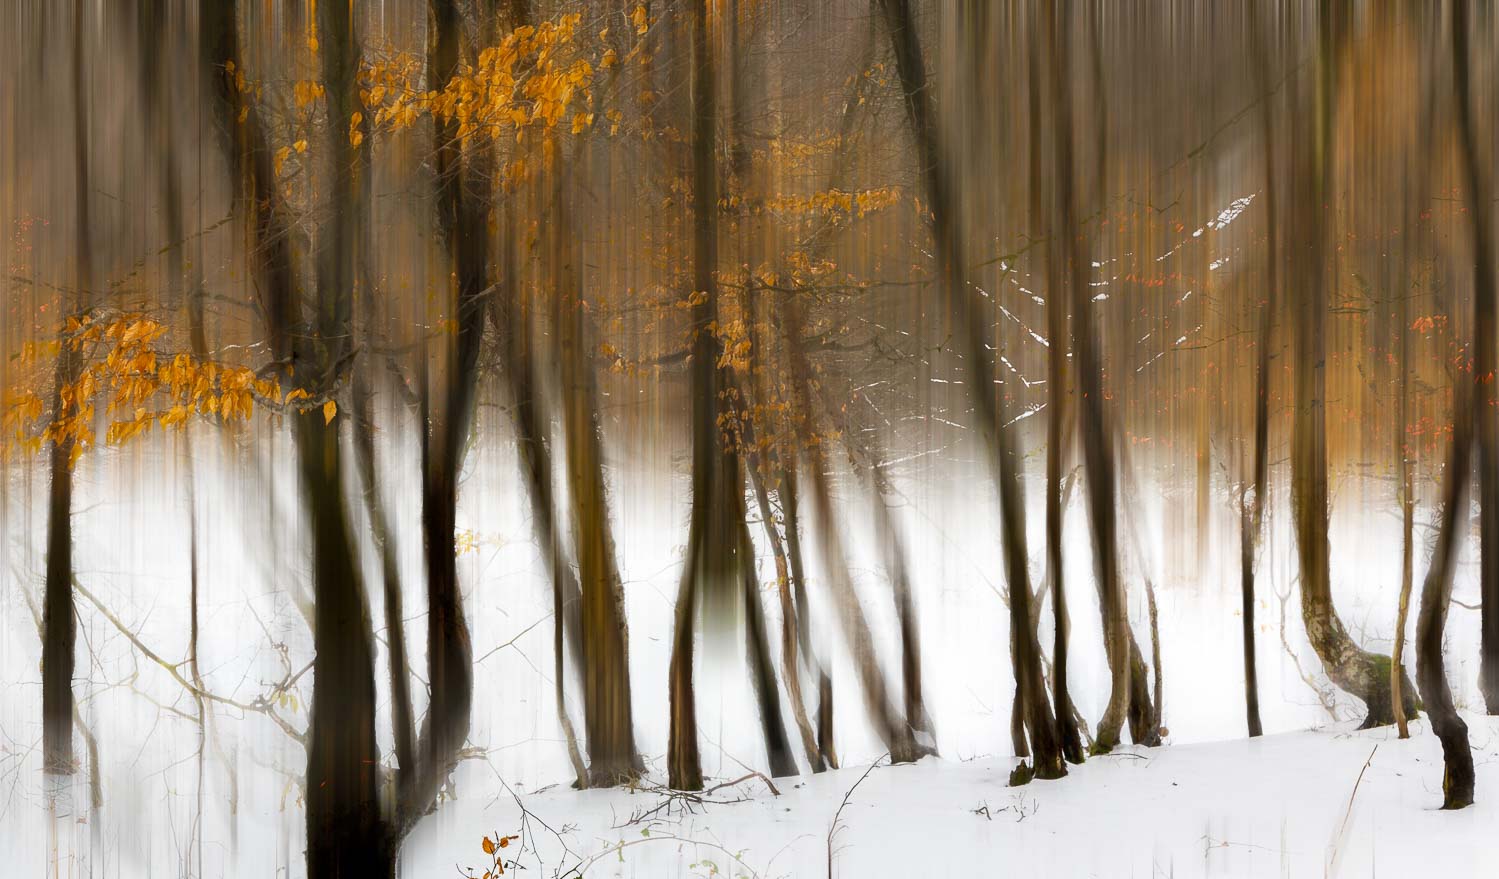 Beech trees in snow